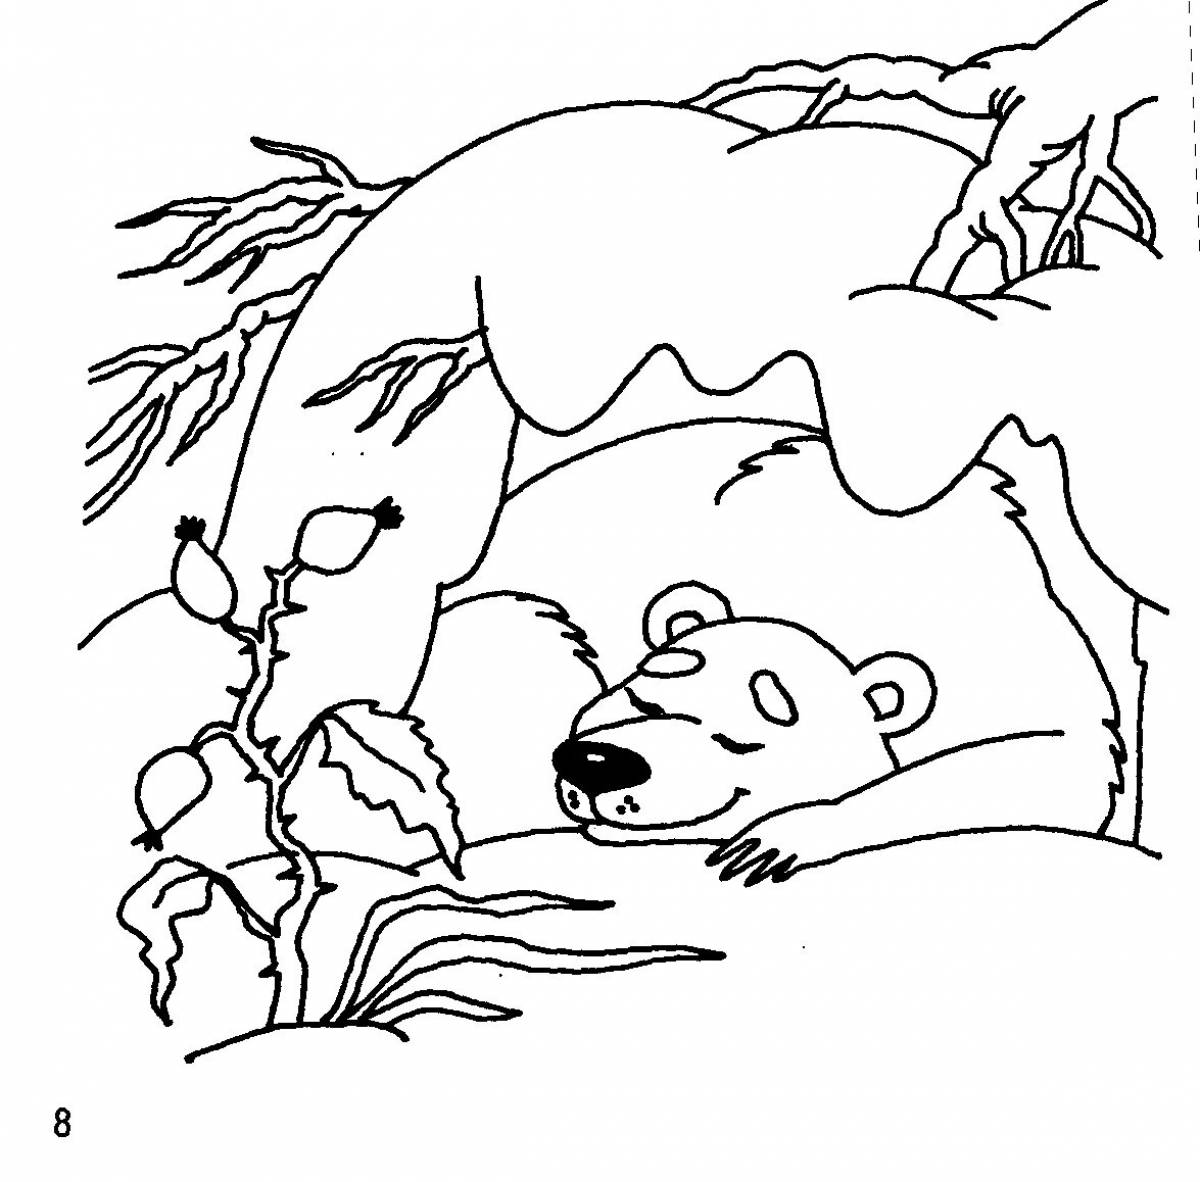 Bear sleeping in children's den #7